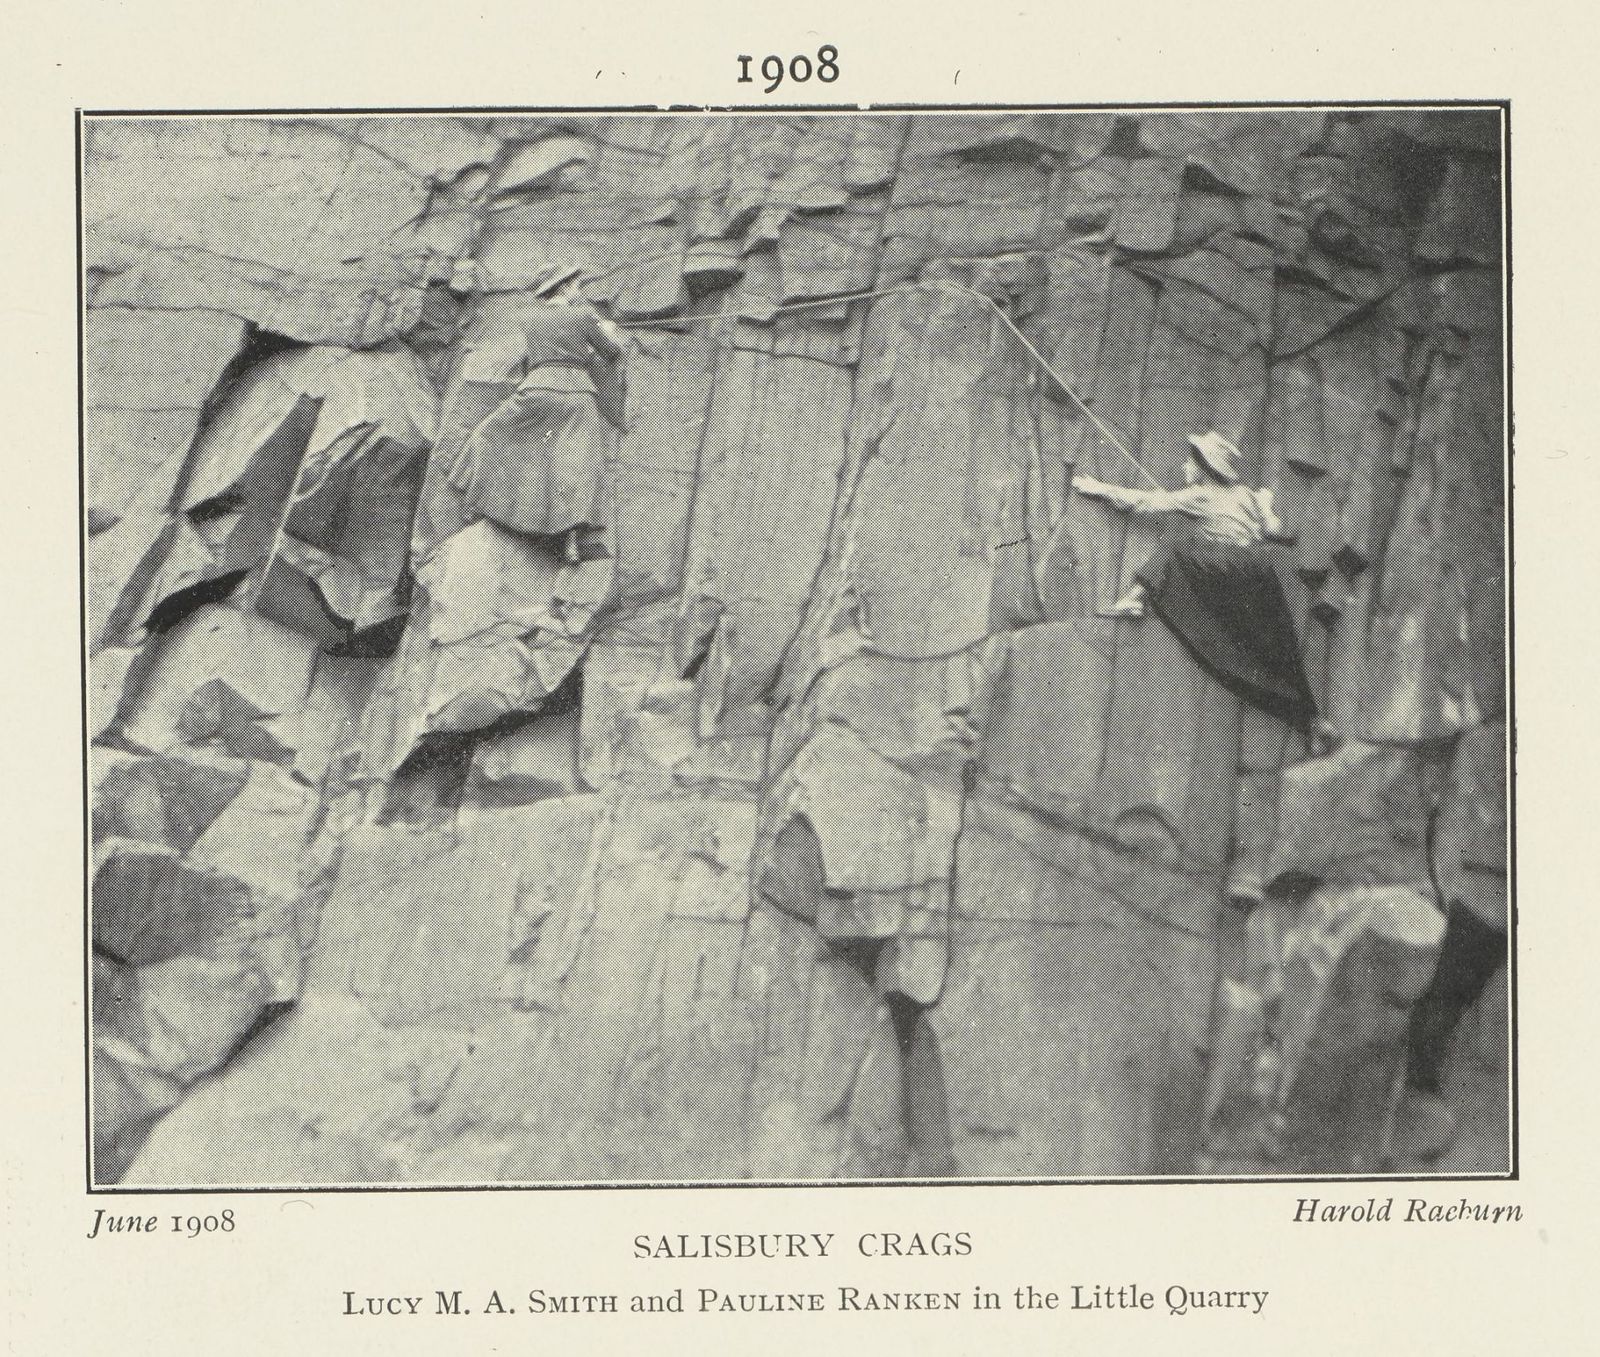 Petticoats and Pinnacles - Scotland's Pioneering Mountain Women: a photo of two women climbing in 1908.